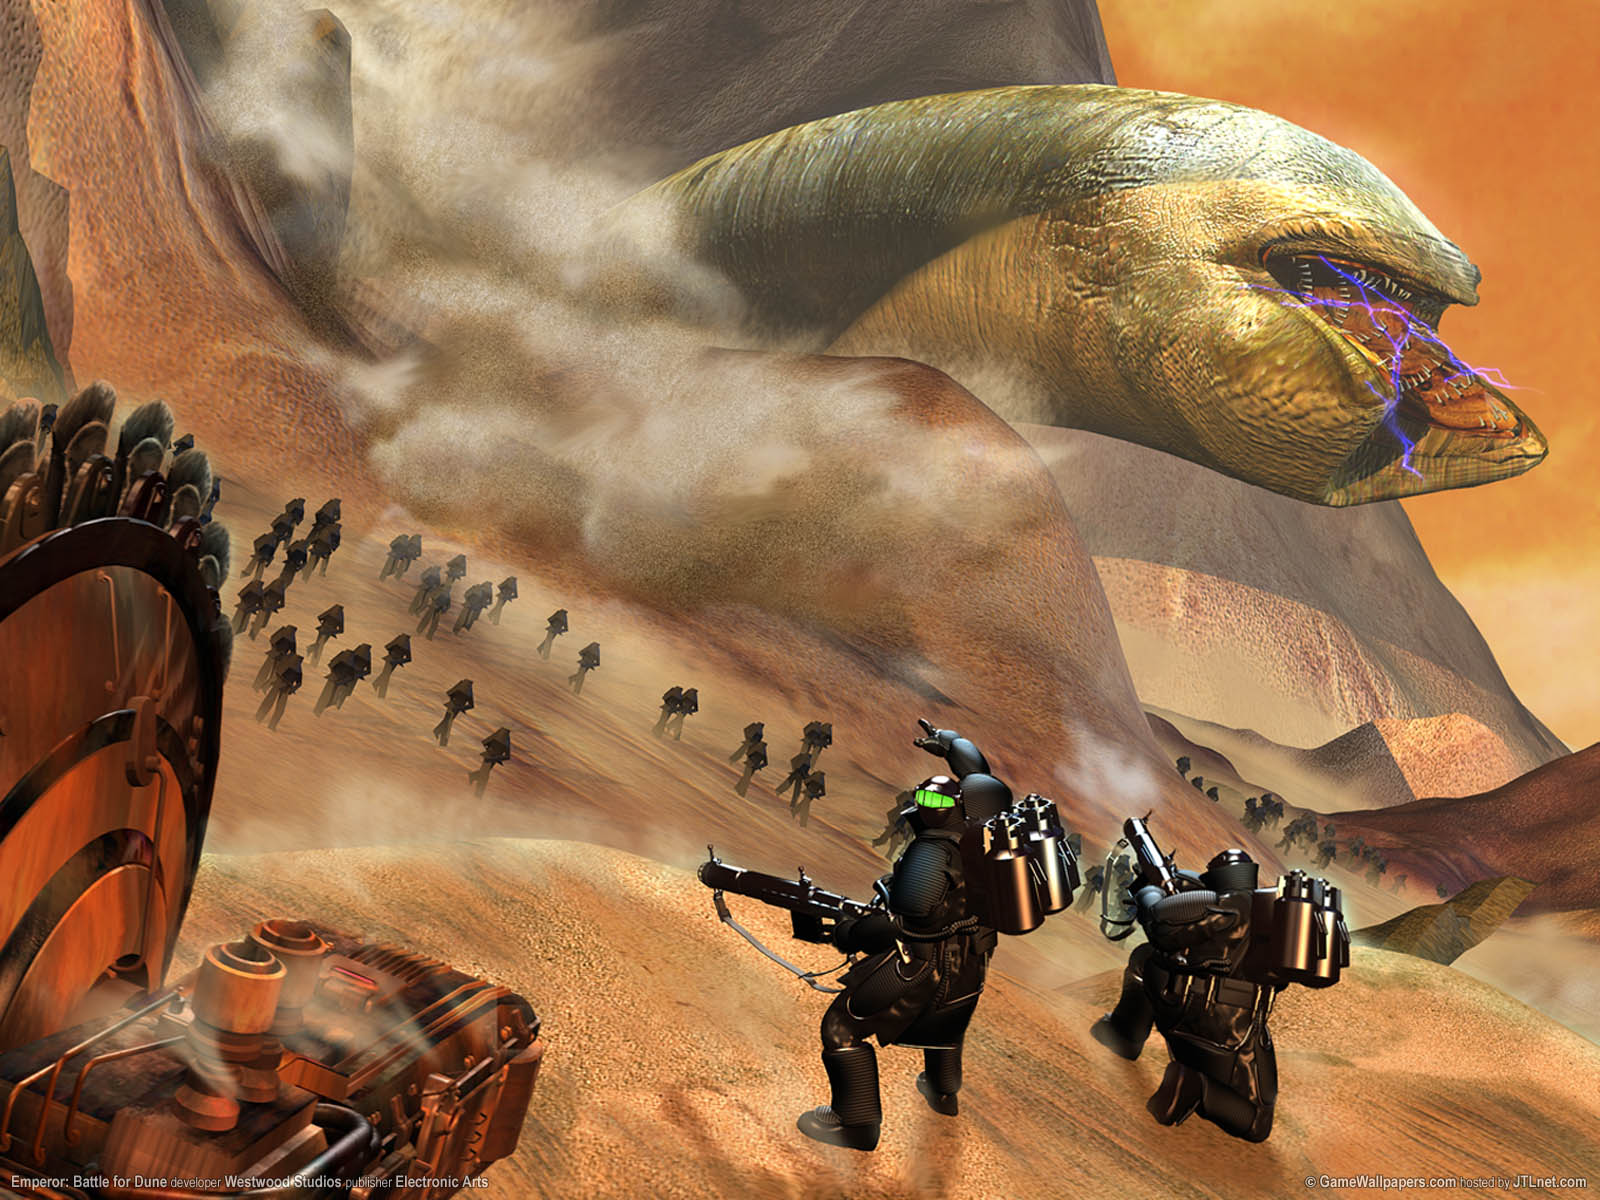 Emperor%3A Battle for Dune fond d'cran 07 1600x1200